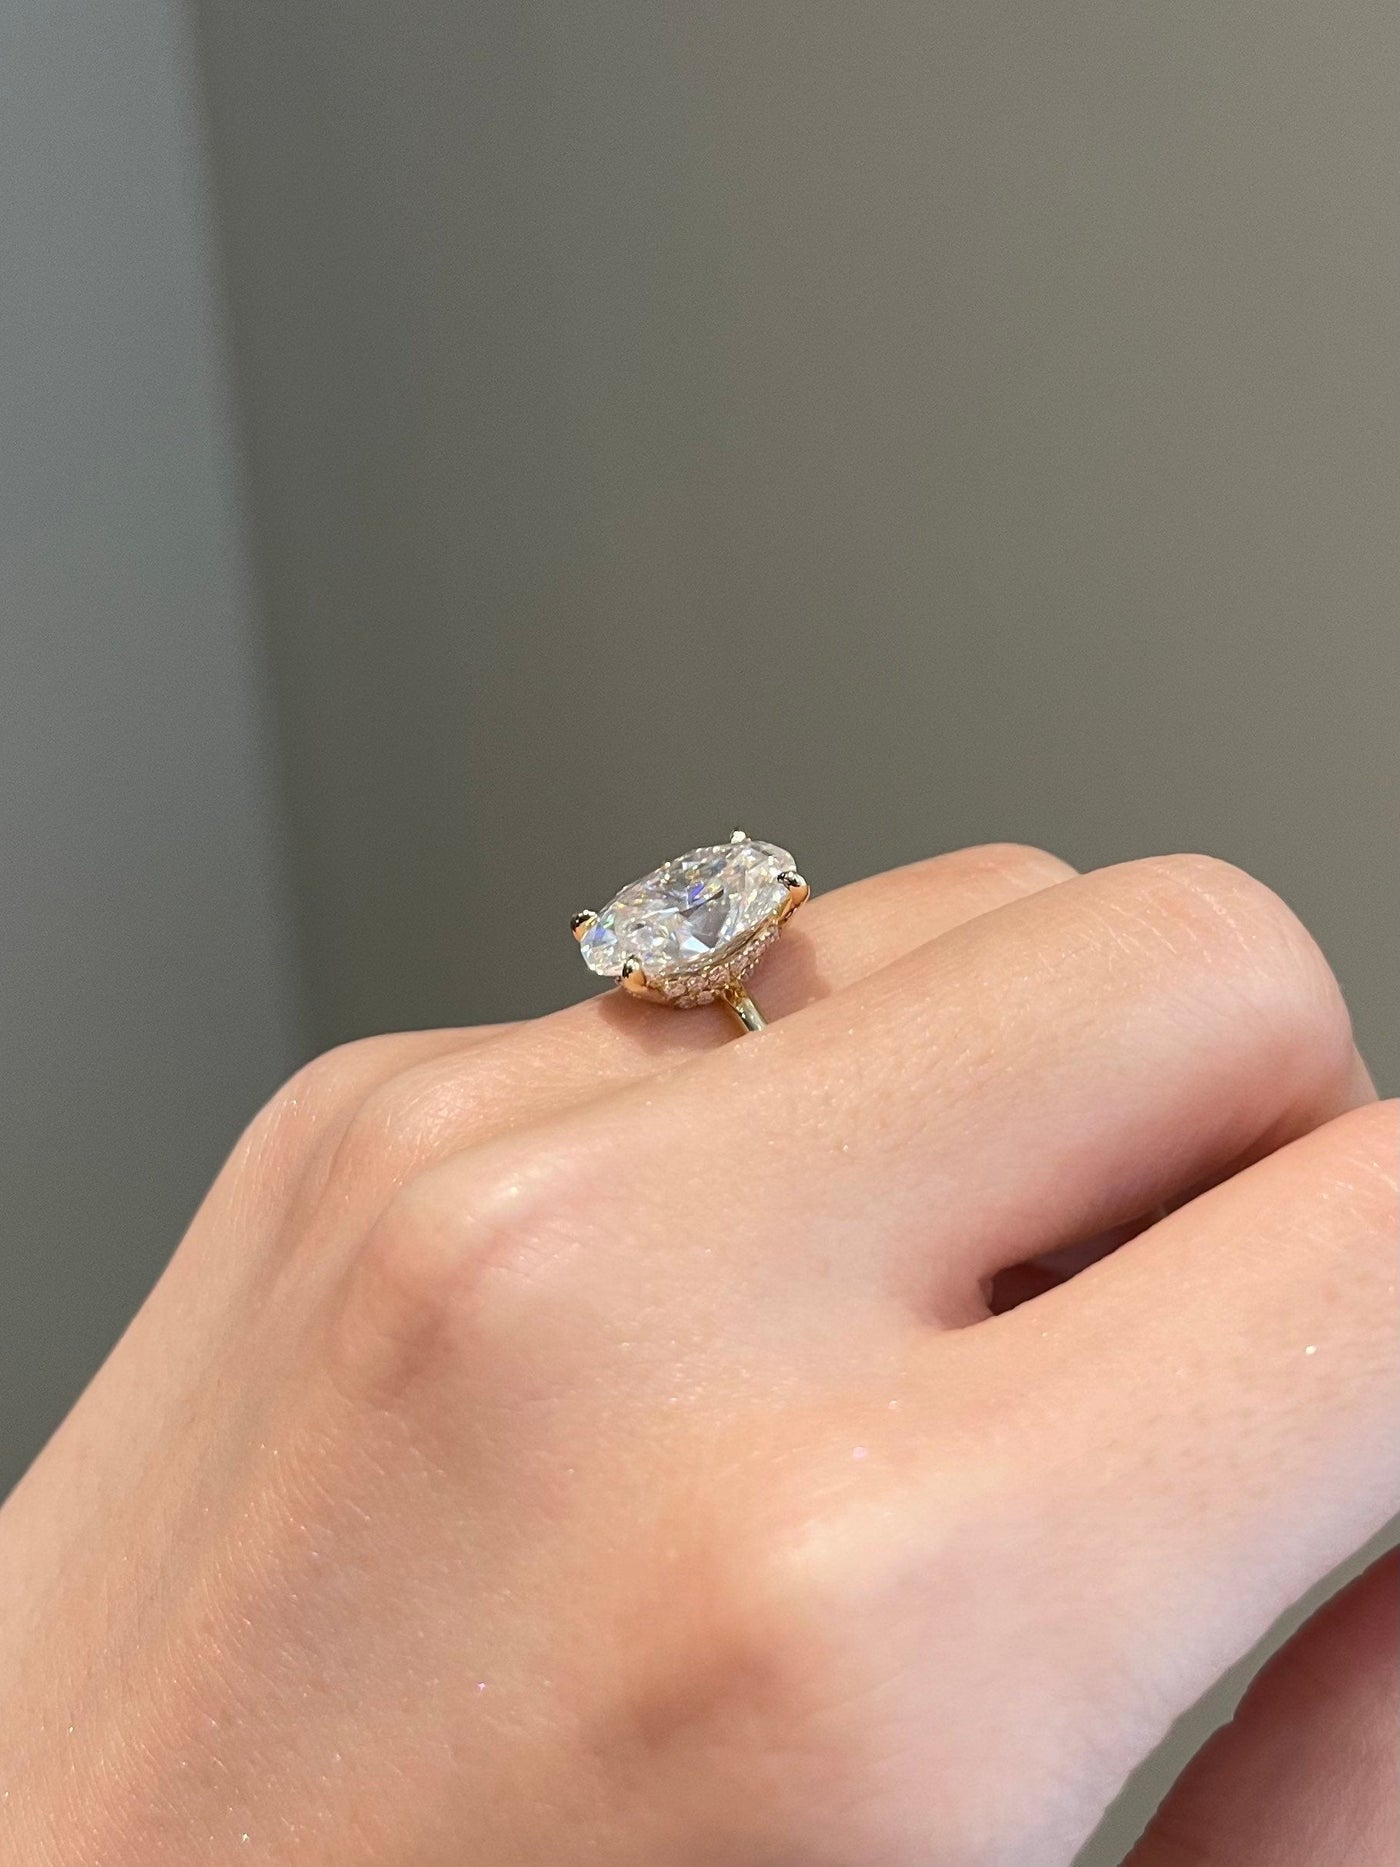 5.0ct Elongated Oval Cut Hidden Halo Moissanite Diamond Engagement Ring